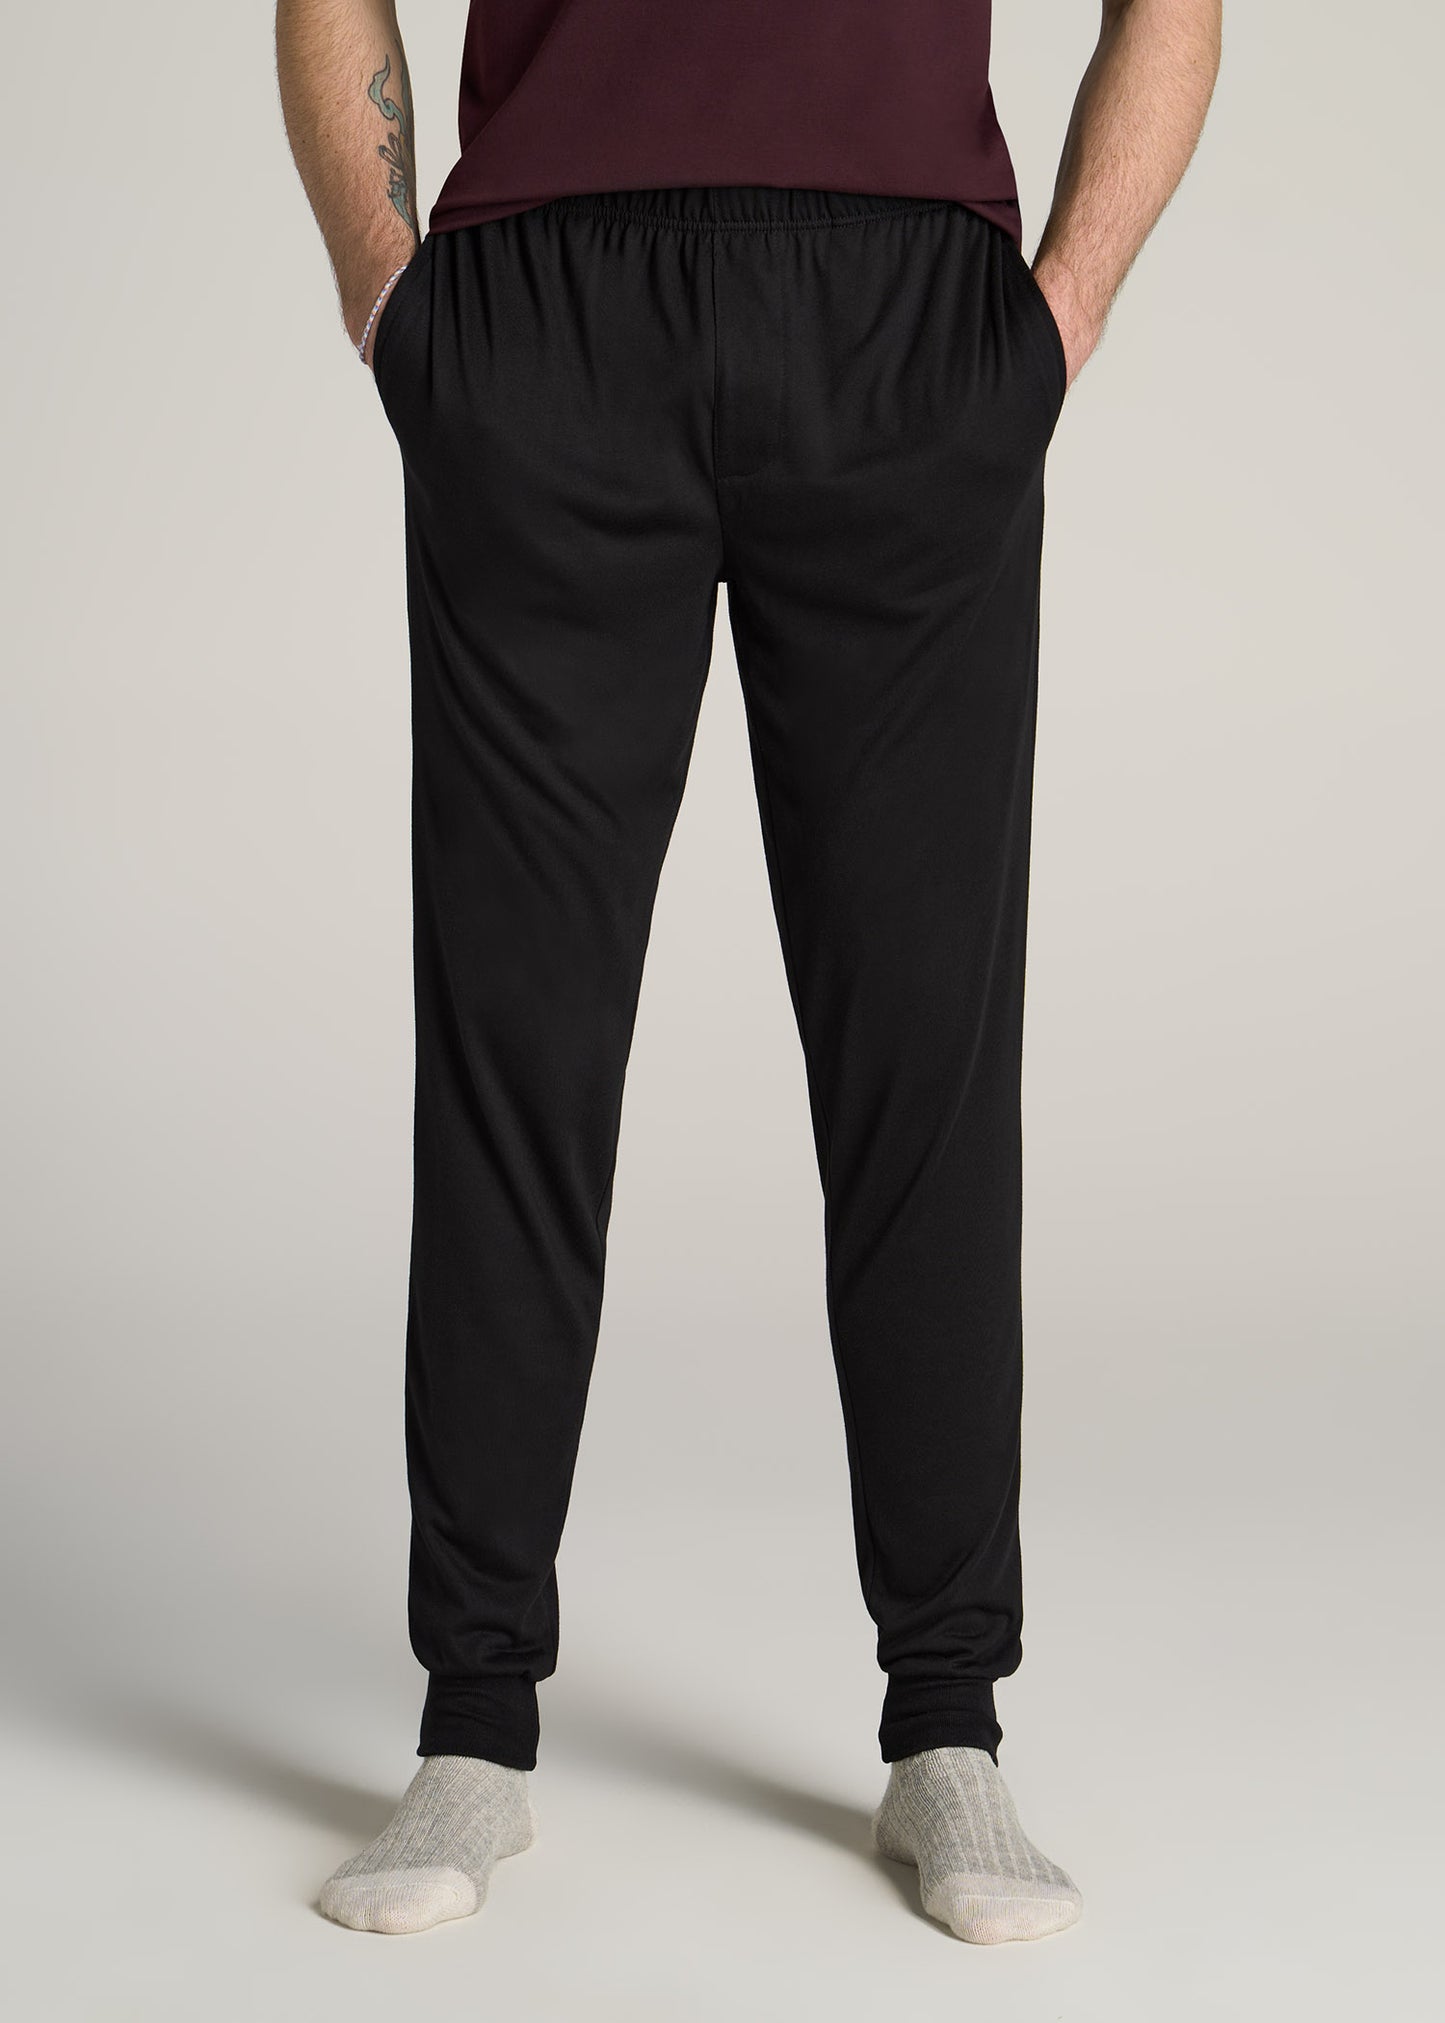 Open Bottom Sweatpants: Men's Tall Fleece Black Pants – American Tall